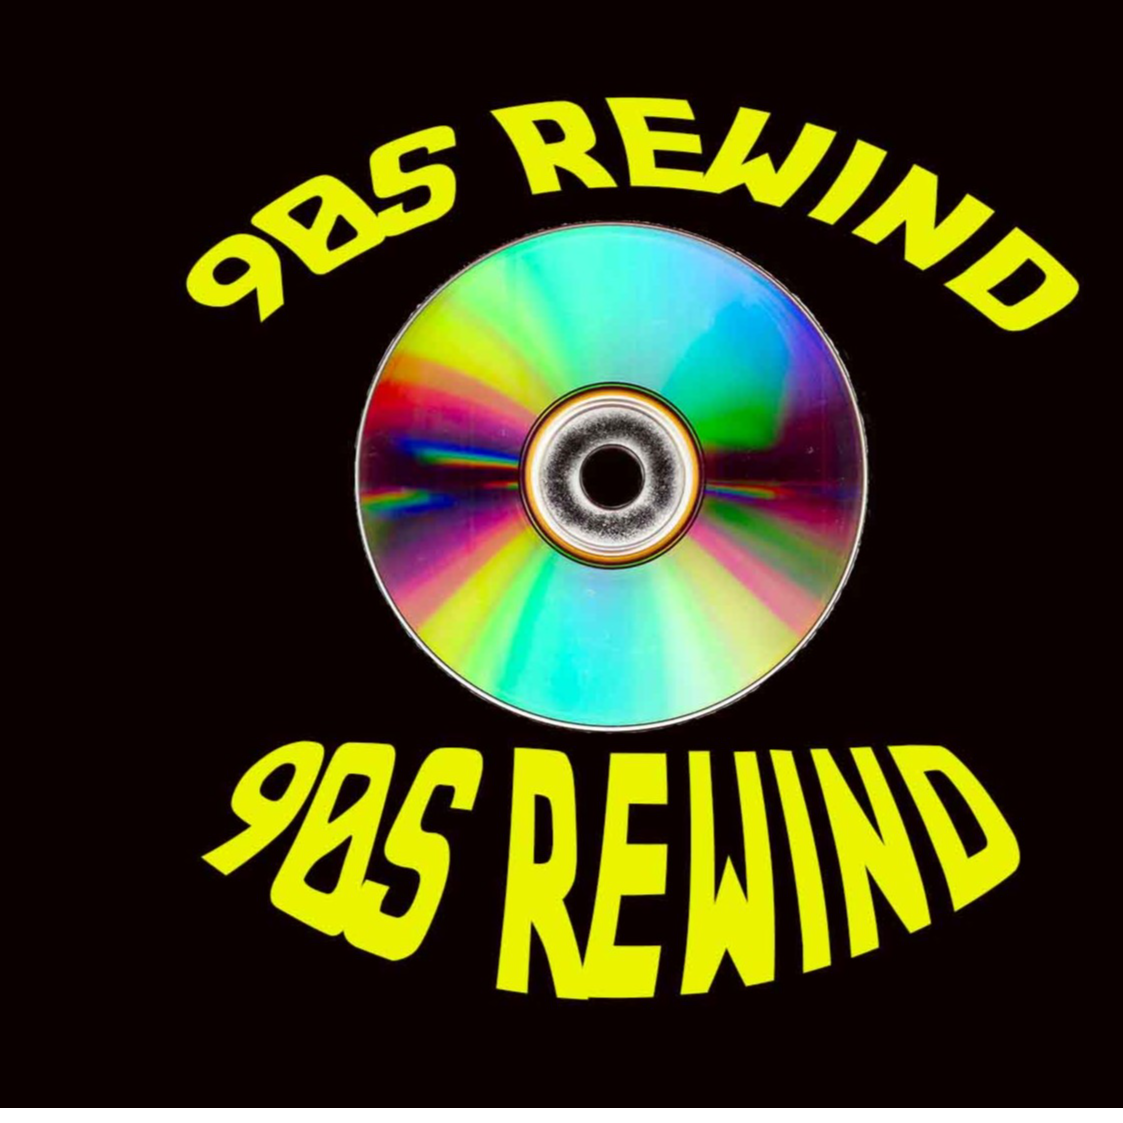 90s Rewind